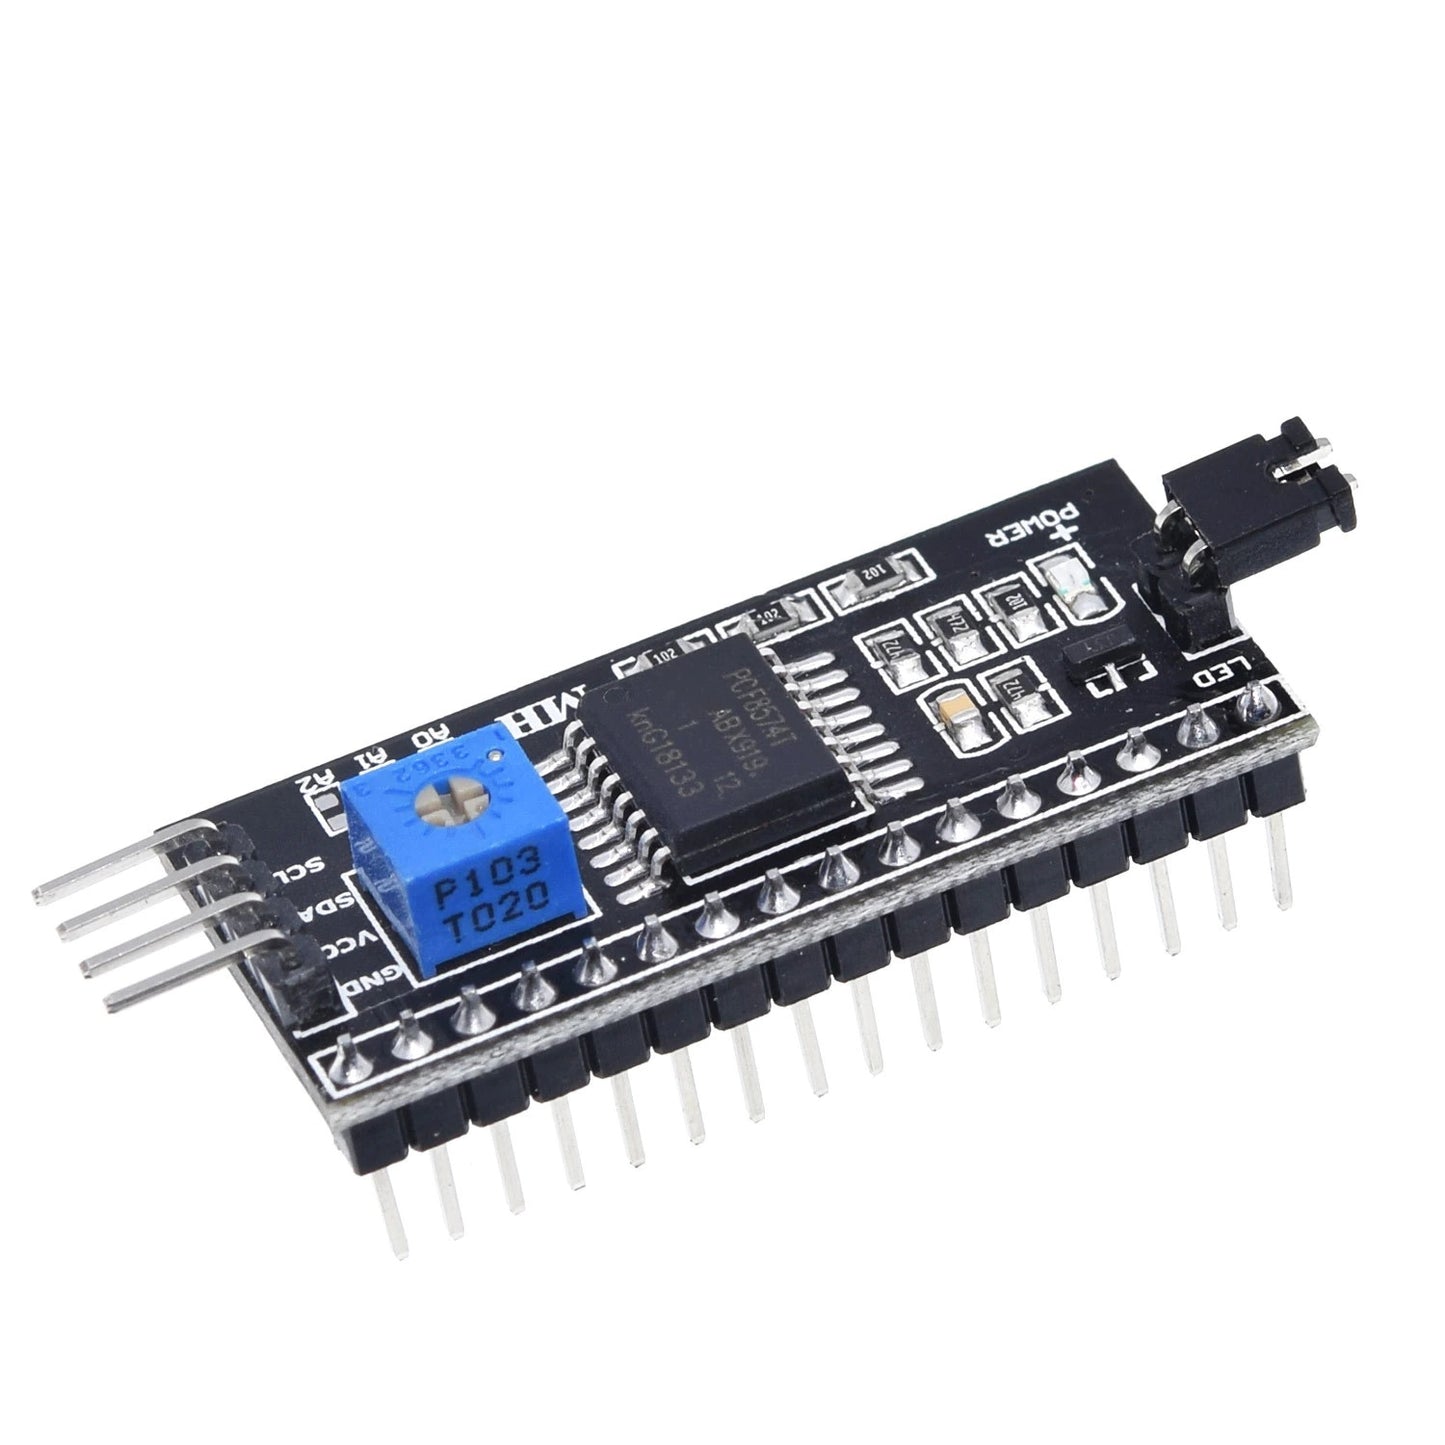 IIC I2C Adapter Serial Interface Board Module 5v Arduino 1602 2004 LCD